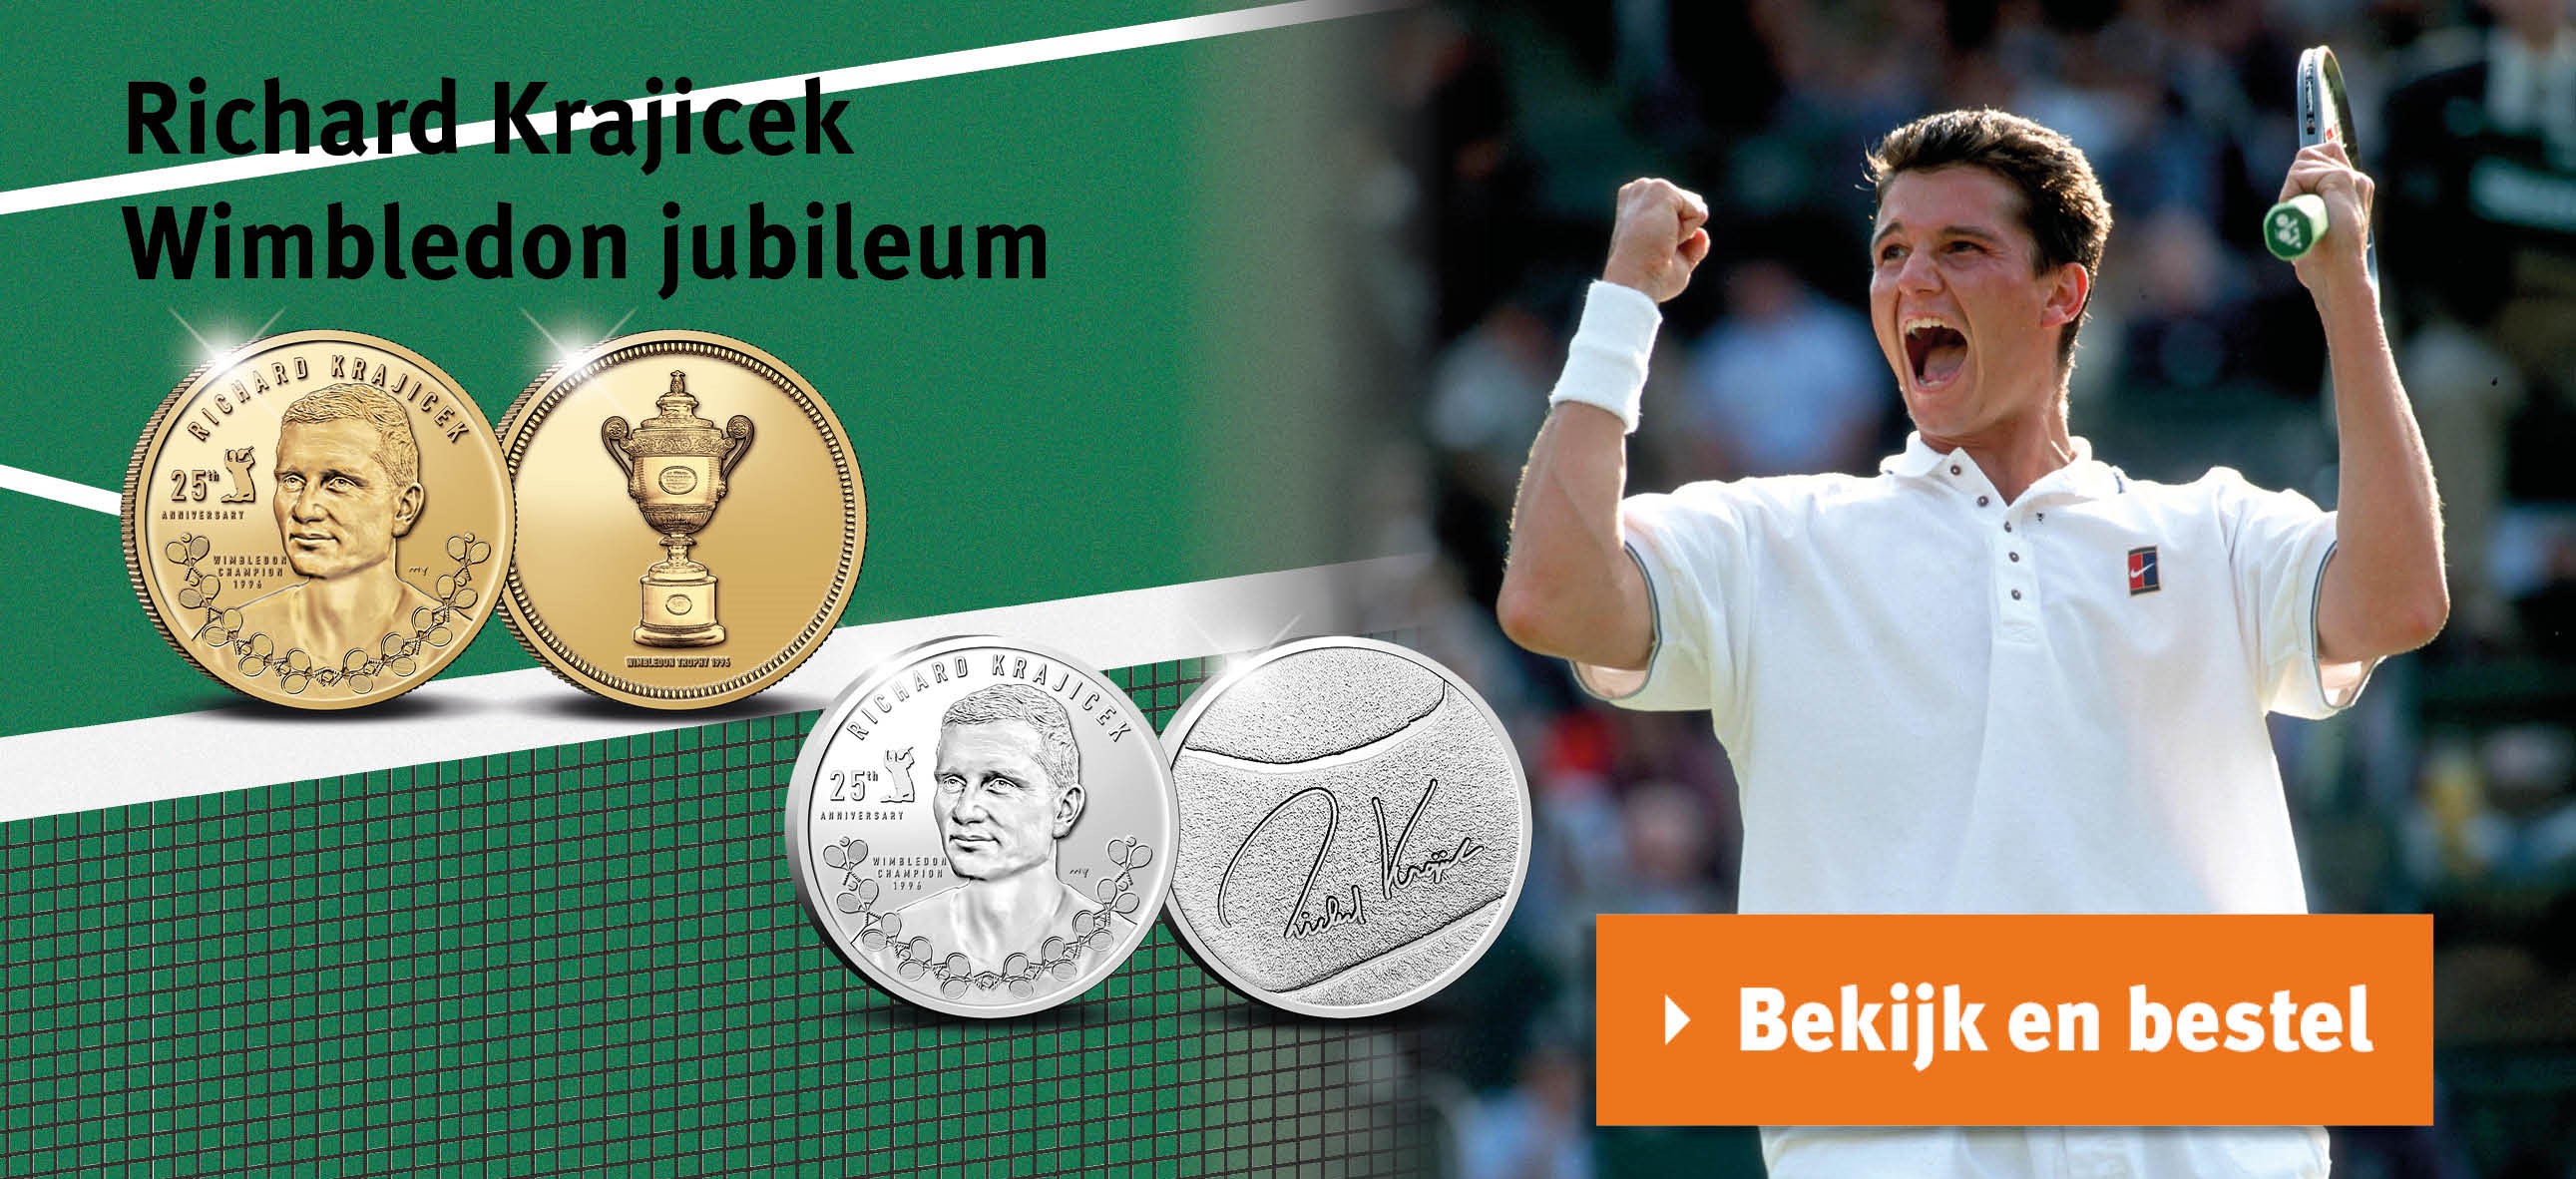 Bekijk en bestel: Richard Krajicek Wimbledon jubileum uitgiften